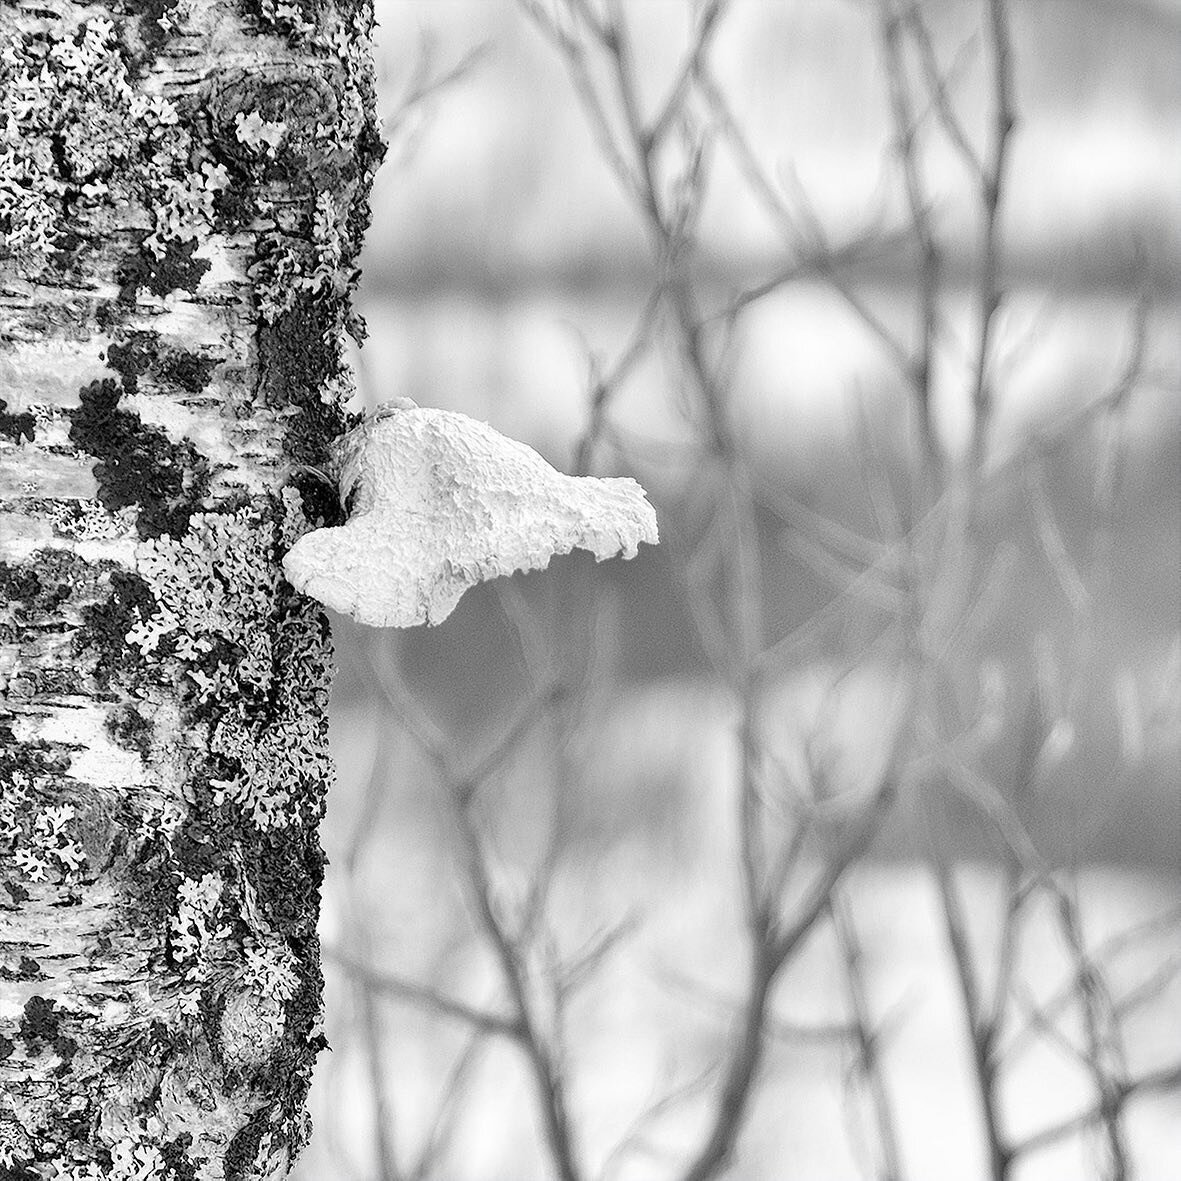 Artic Fungi⁠⁠
⁠⁠
#frozen_mushrooms #frozen_polyporales #frozen_fungus #birch_mushroom  #birch_polypore  #birch_bracket #snow_on_mushroom #macro #macro mushroom #forest_mushroom #Tromso #Norway #abstract #blacknwhite #fineartphotographer #fujifilm #X-